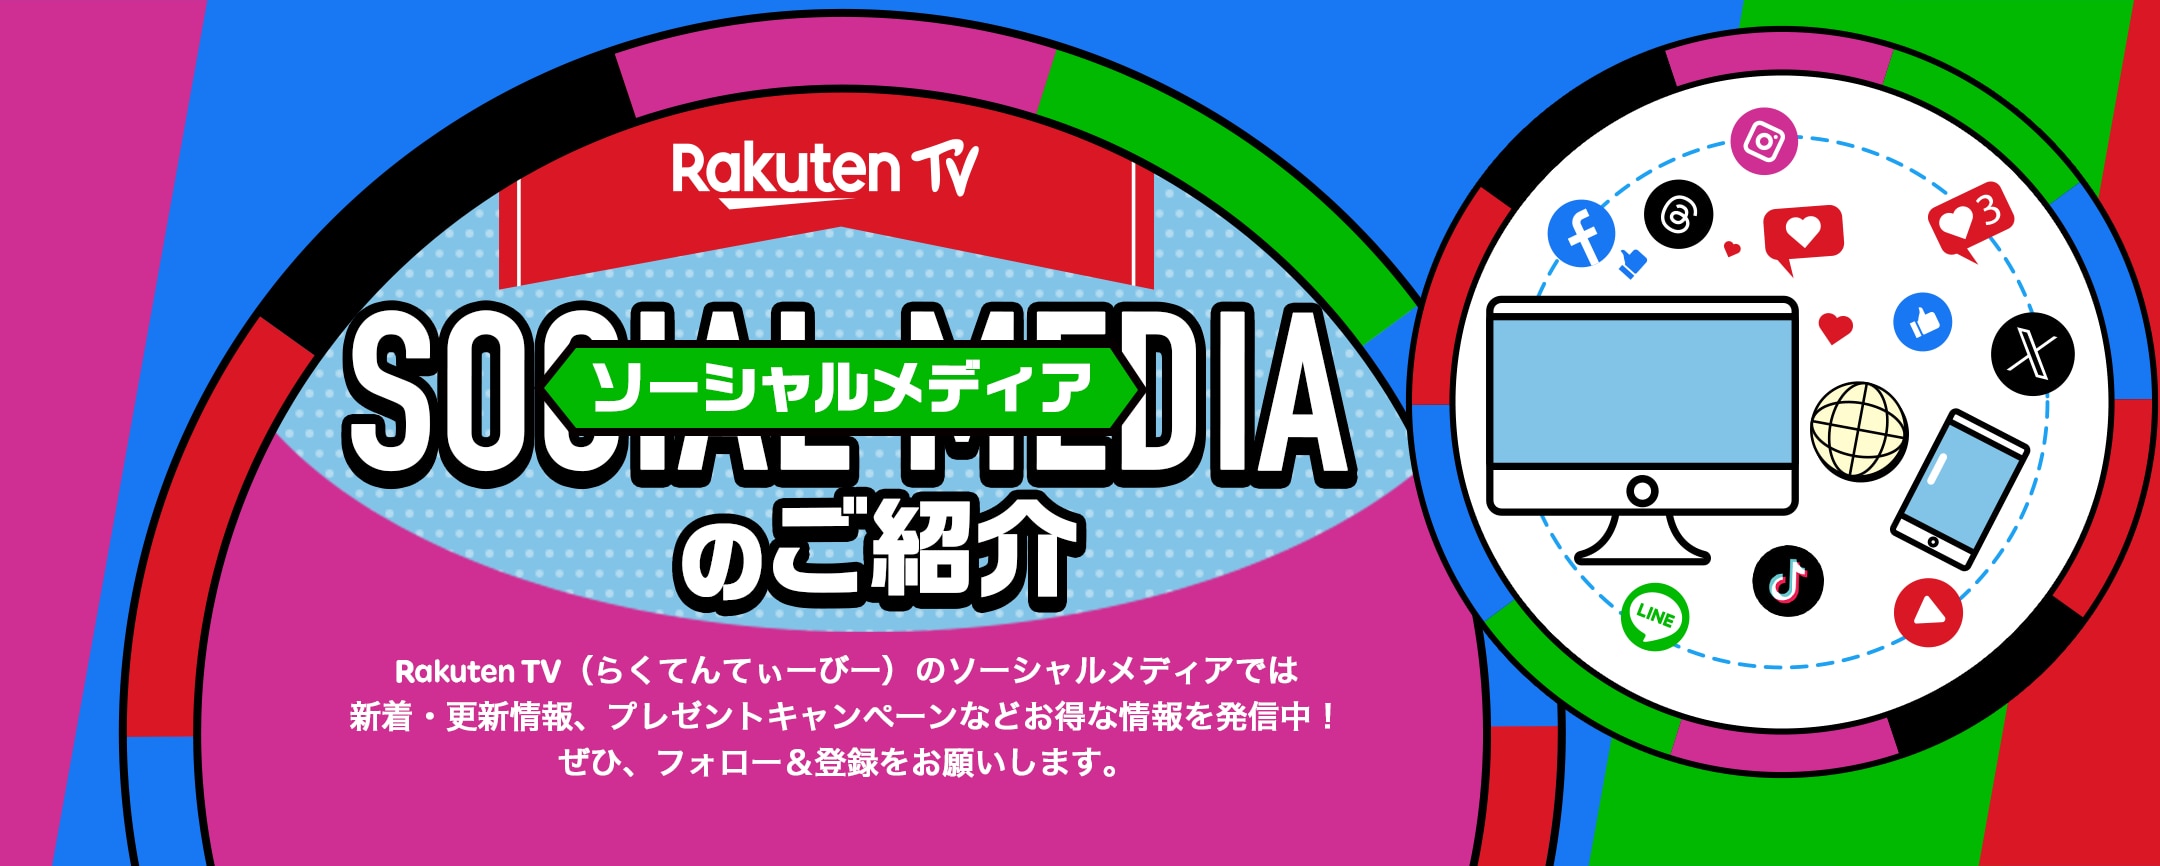 Rakuten TV 公式ソーシャルメディア